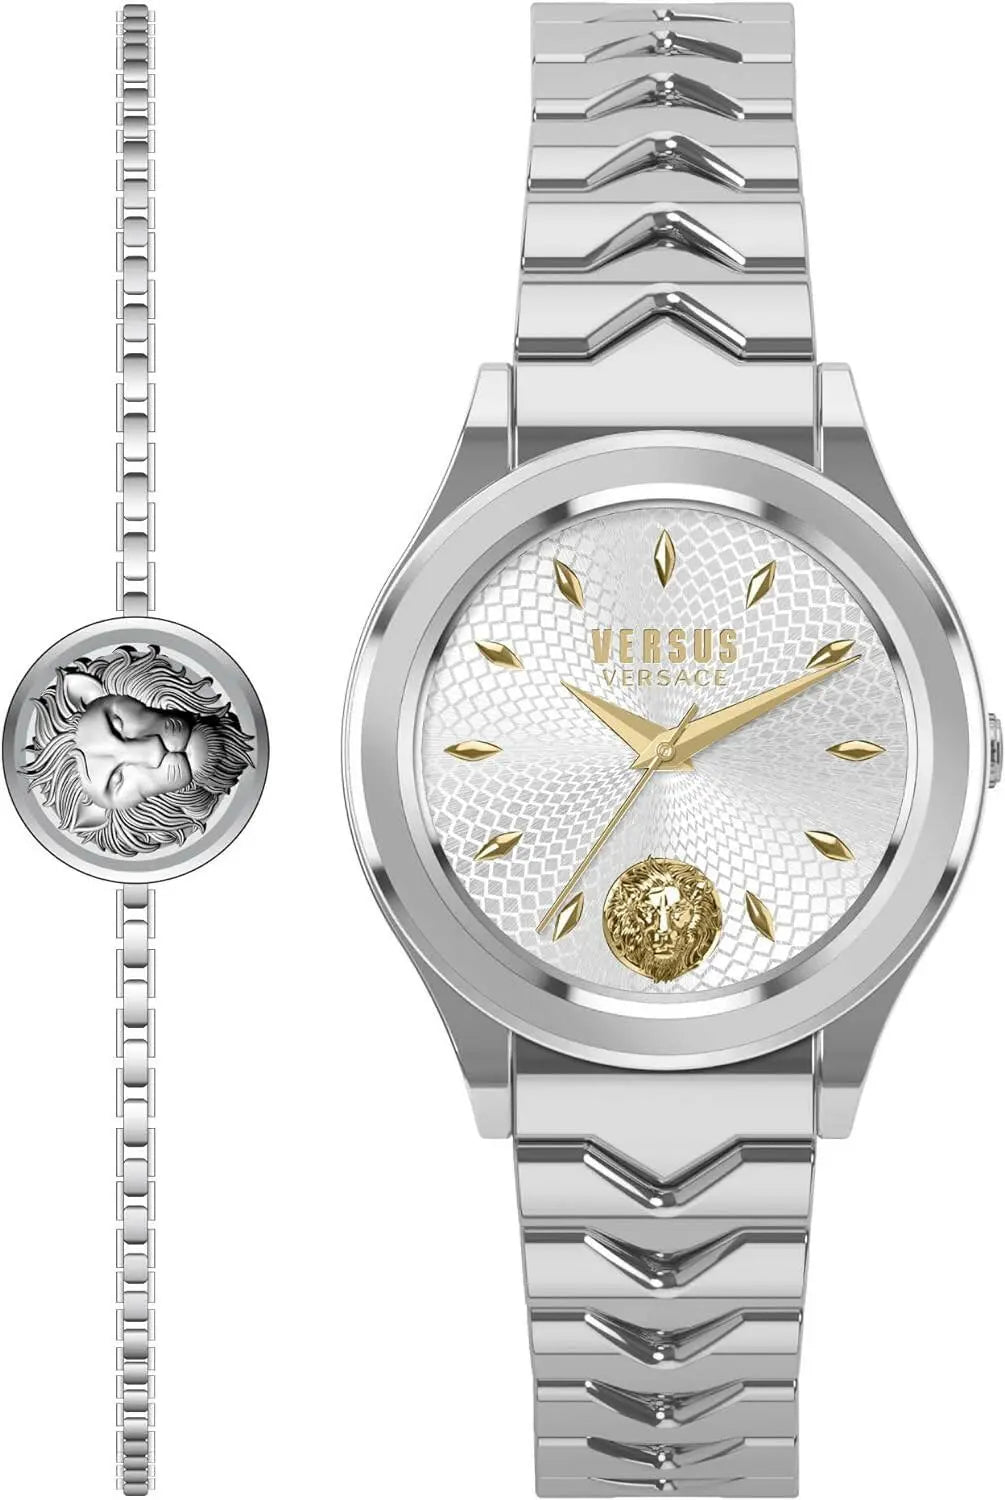 Versus Versace Watch For Women - Silver Dial - 25 MM